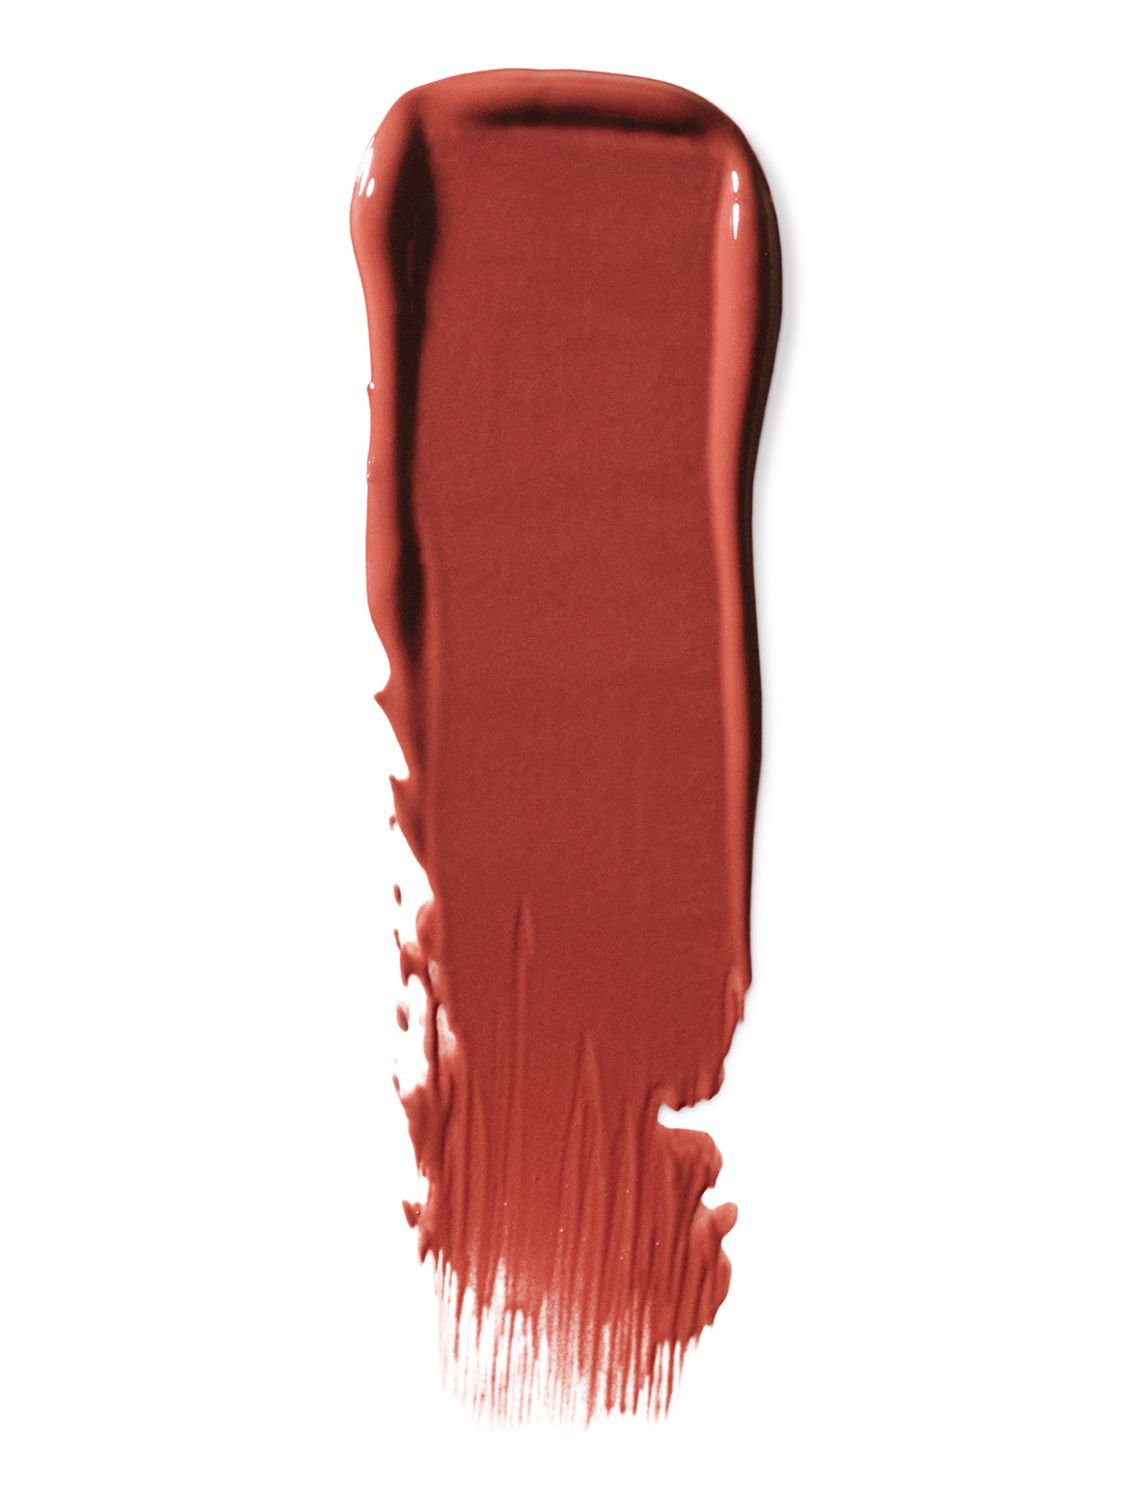 Bobbi Brown Luxe Shine Intense Lipstick, Claret 7